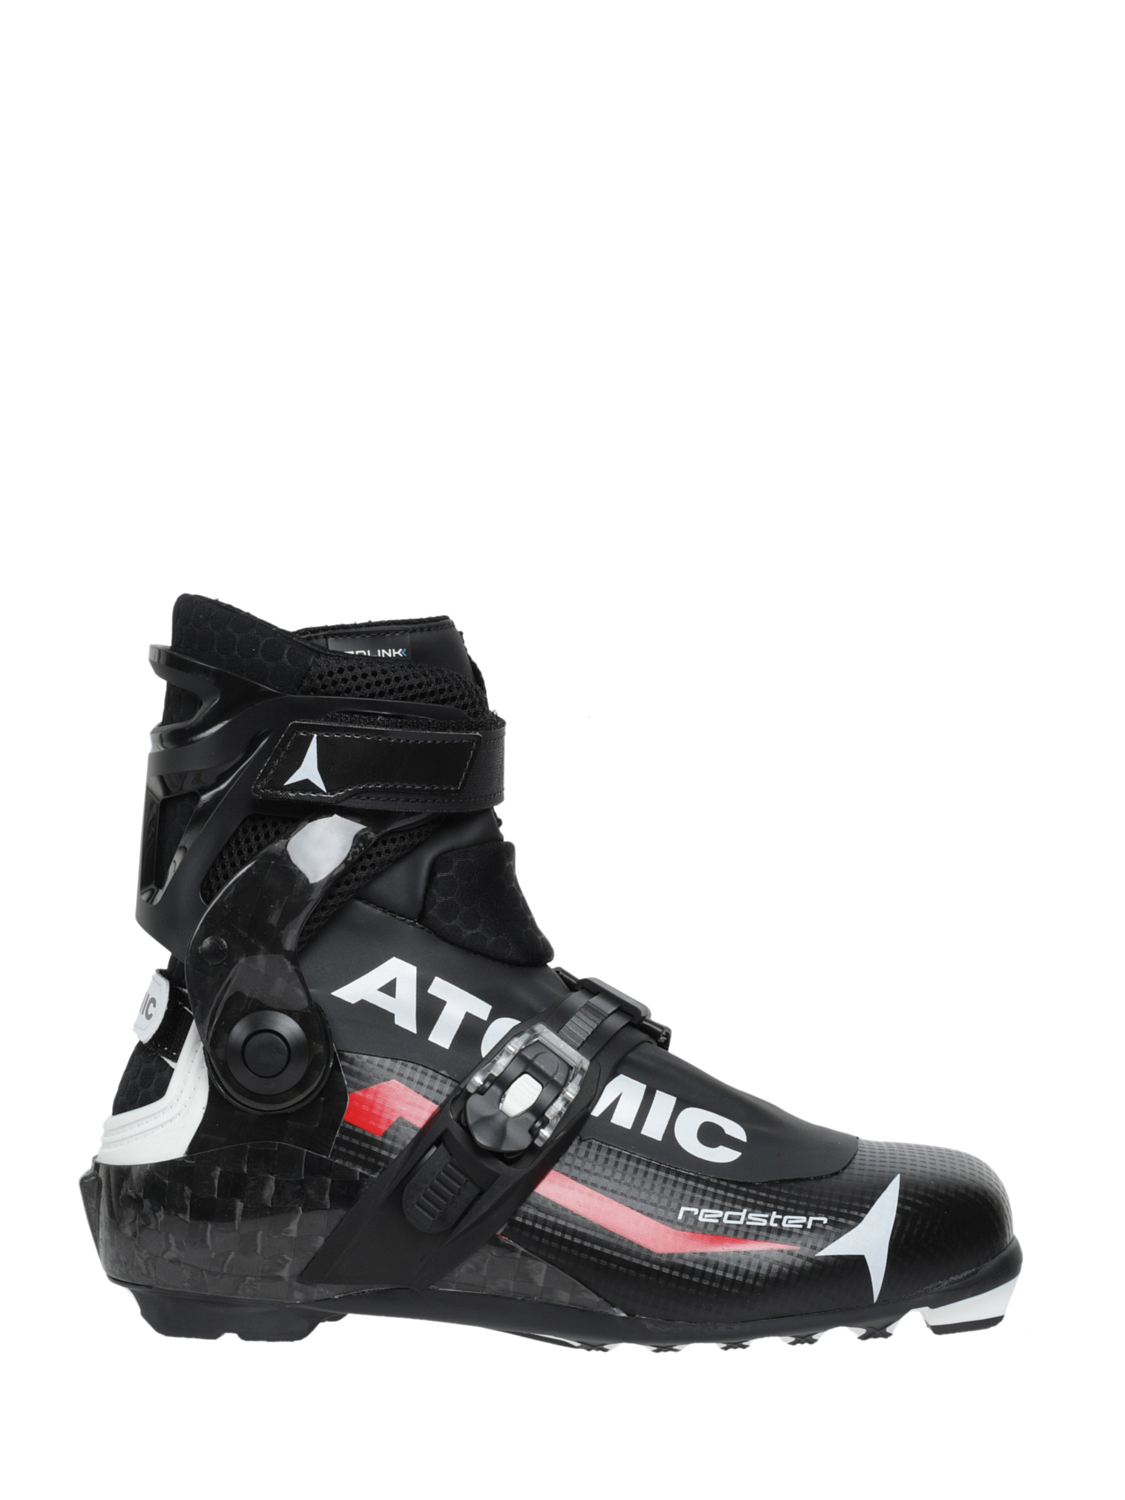 Лыжные ботинки ATOMIC Redster world cup sk prolink Black